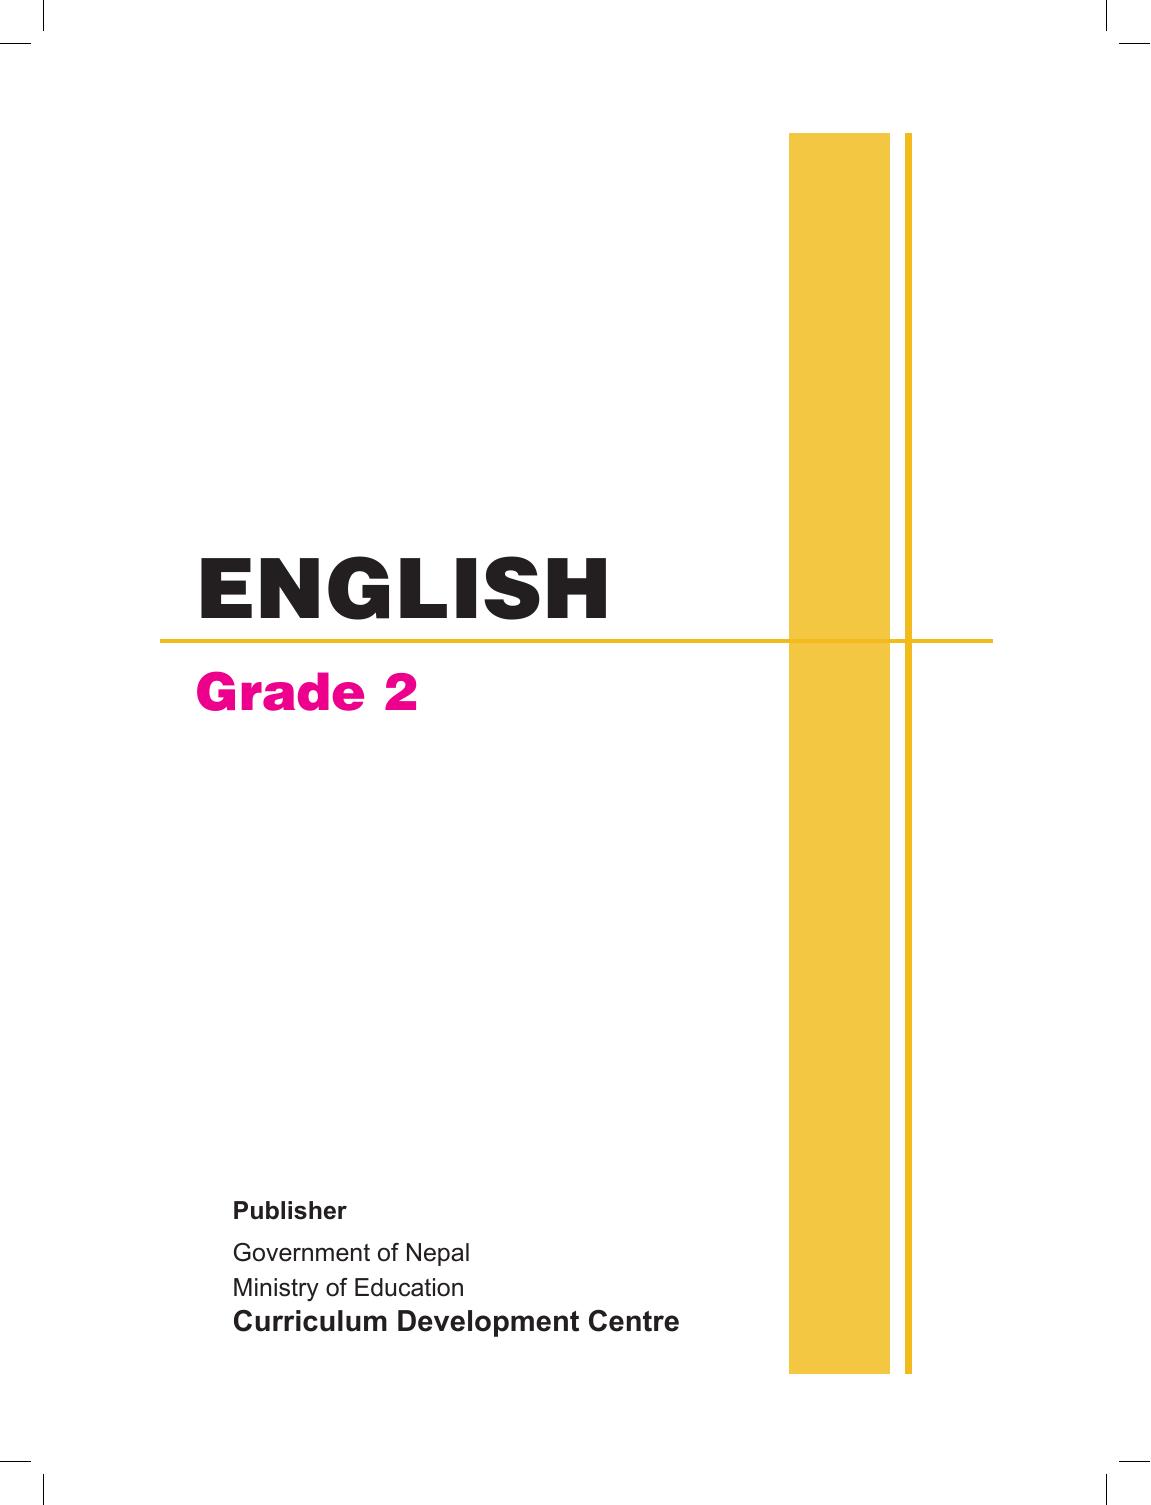 English Grade 2